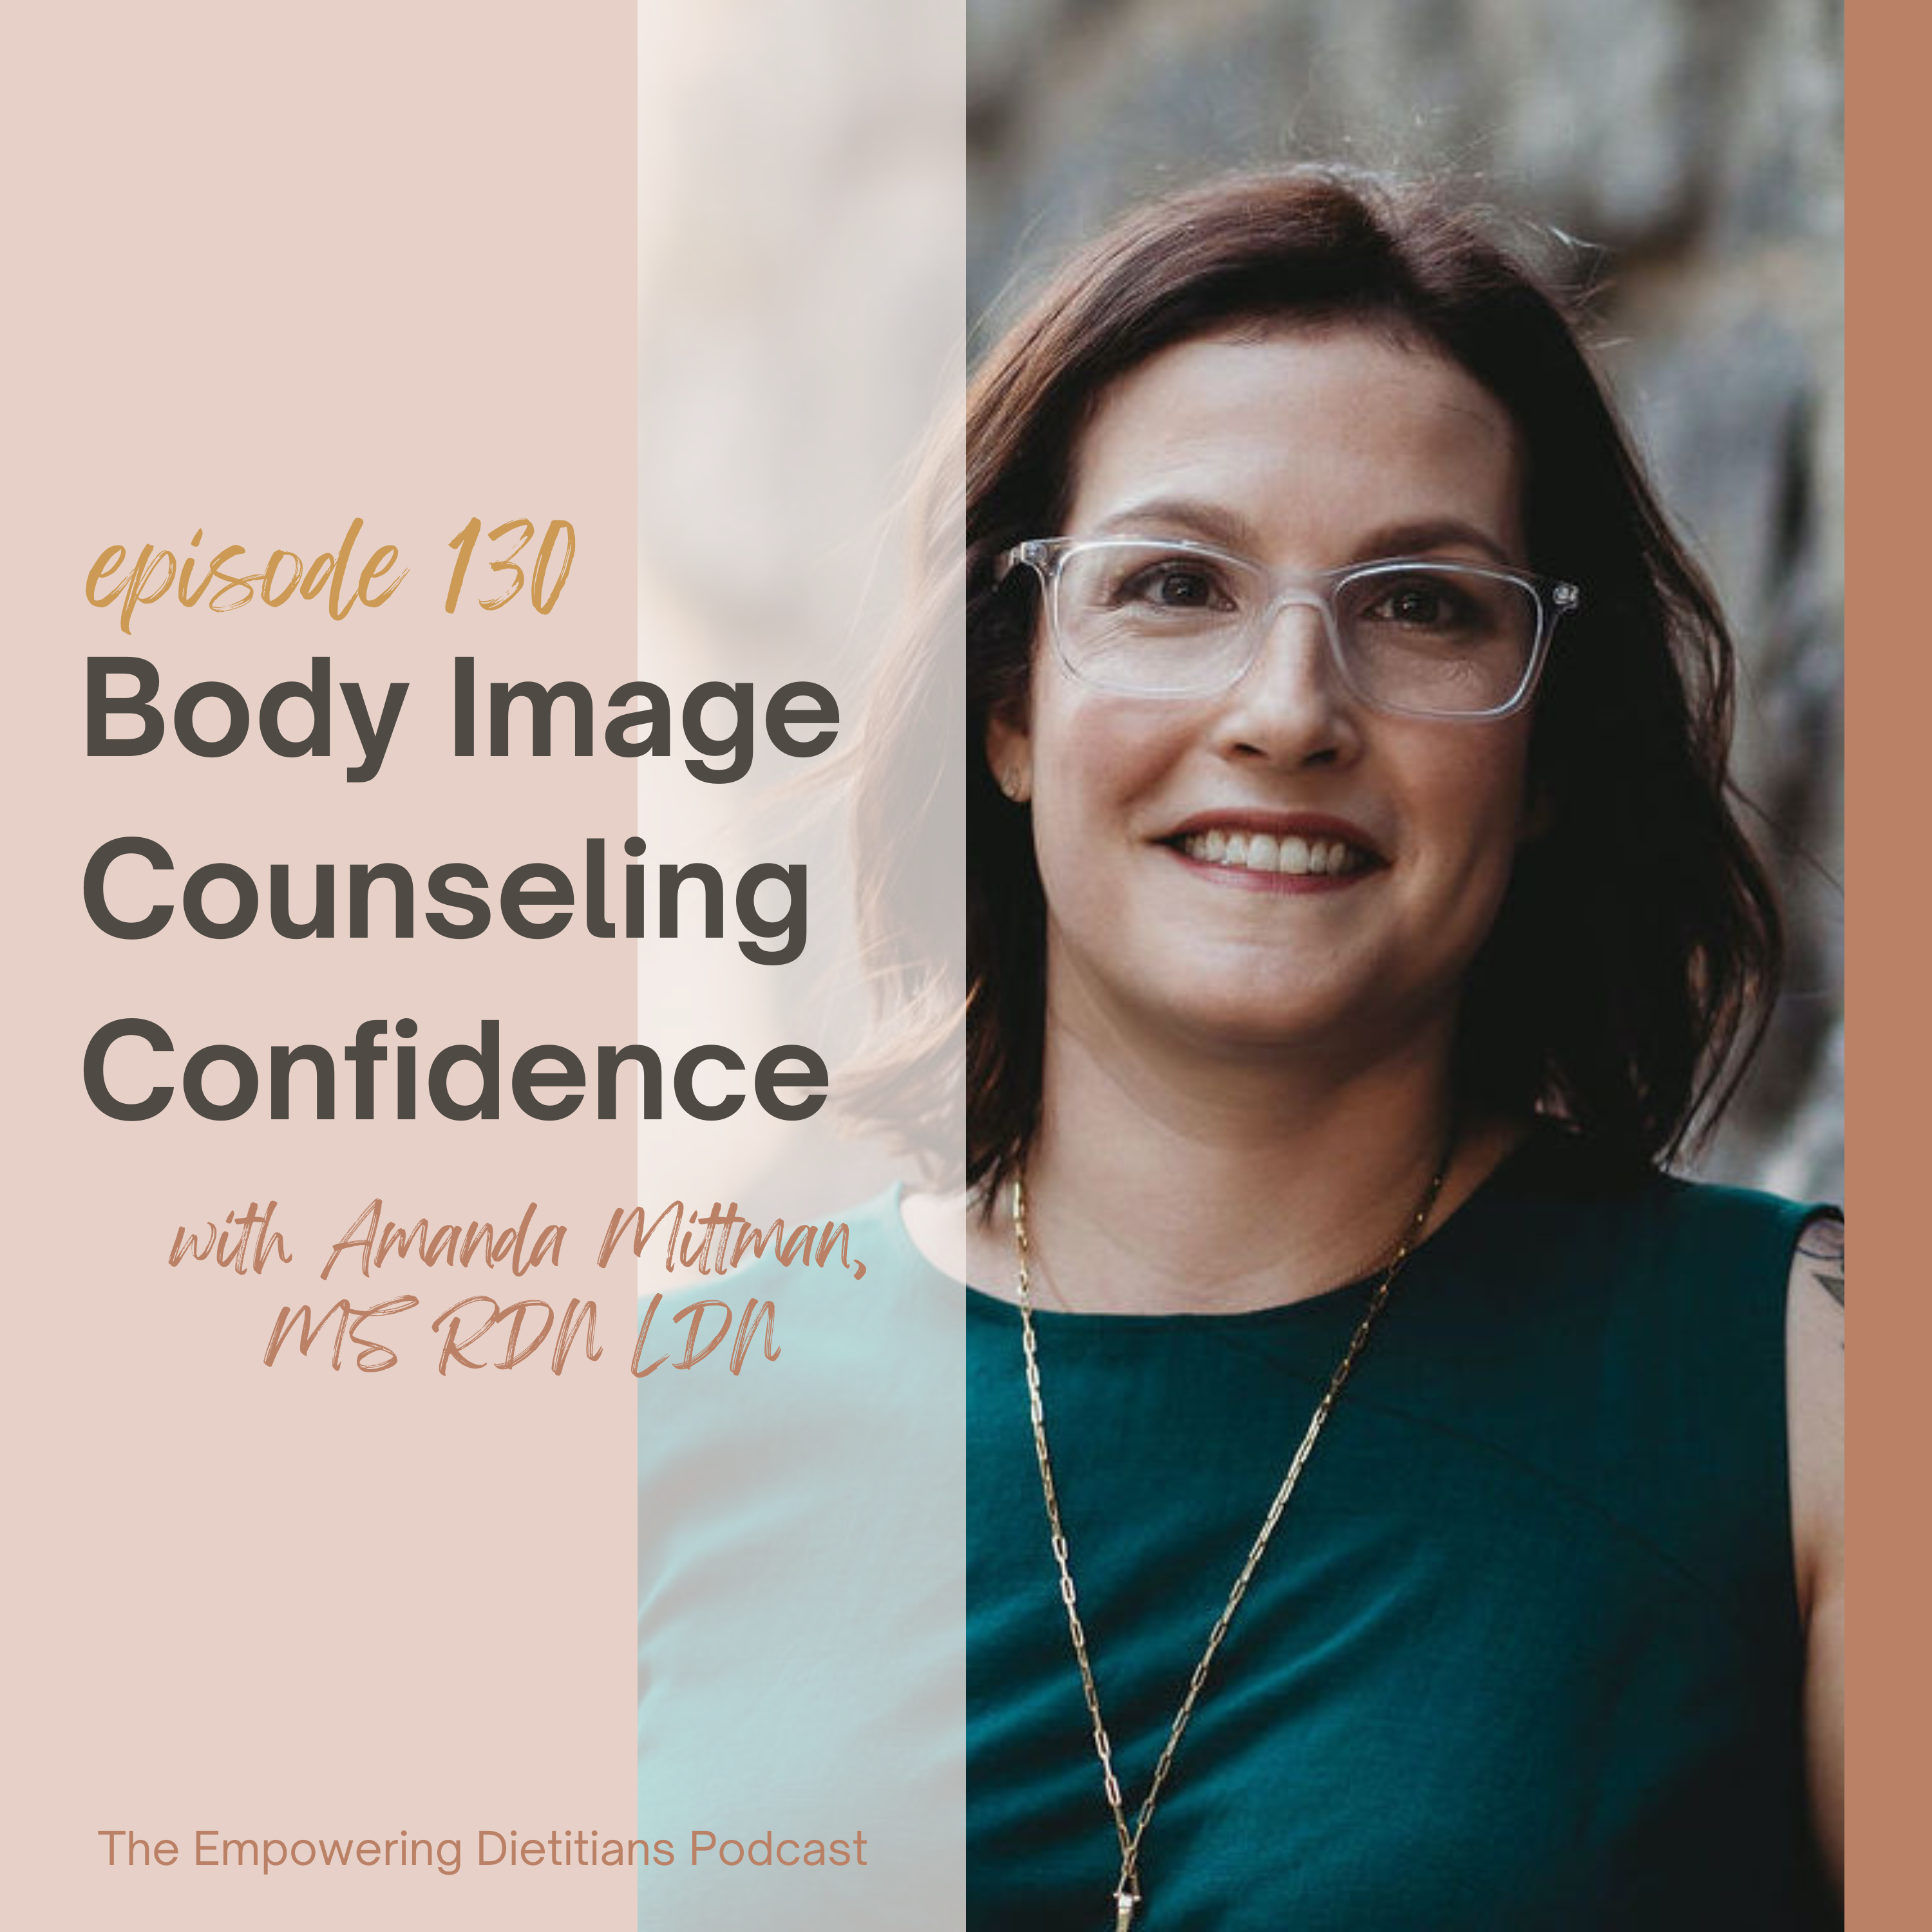 body image counseling confidence with amanda mittman